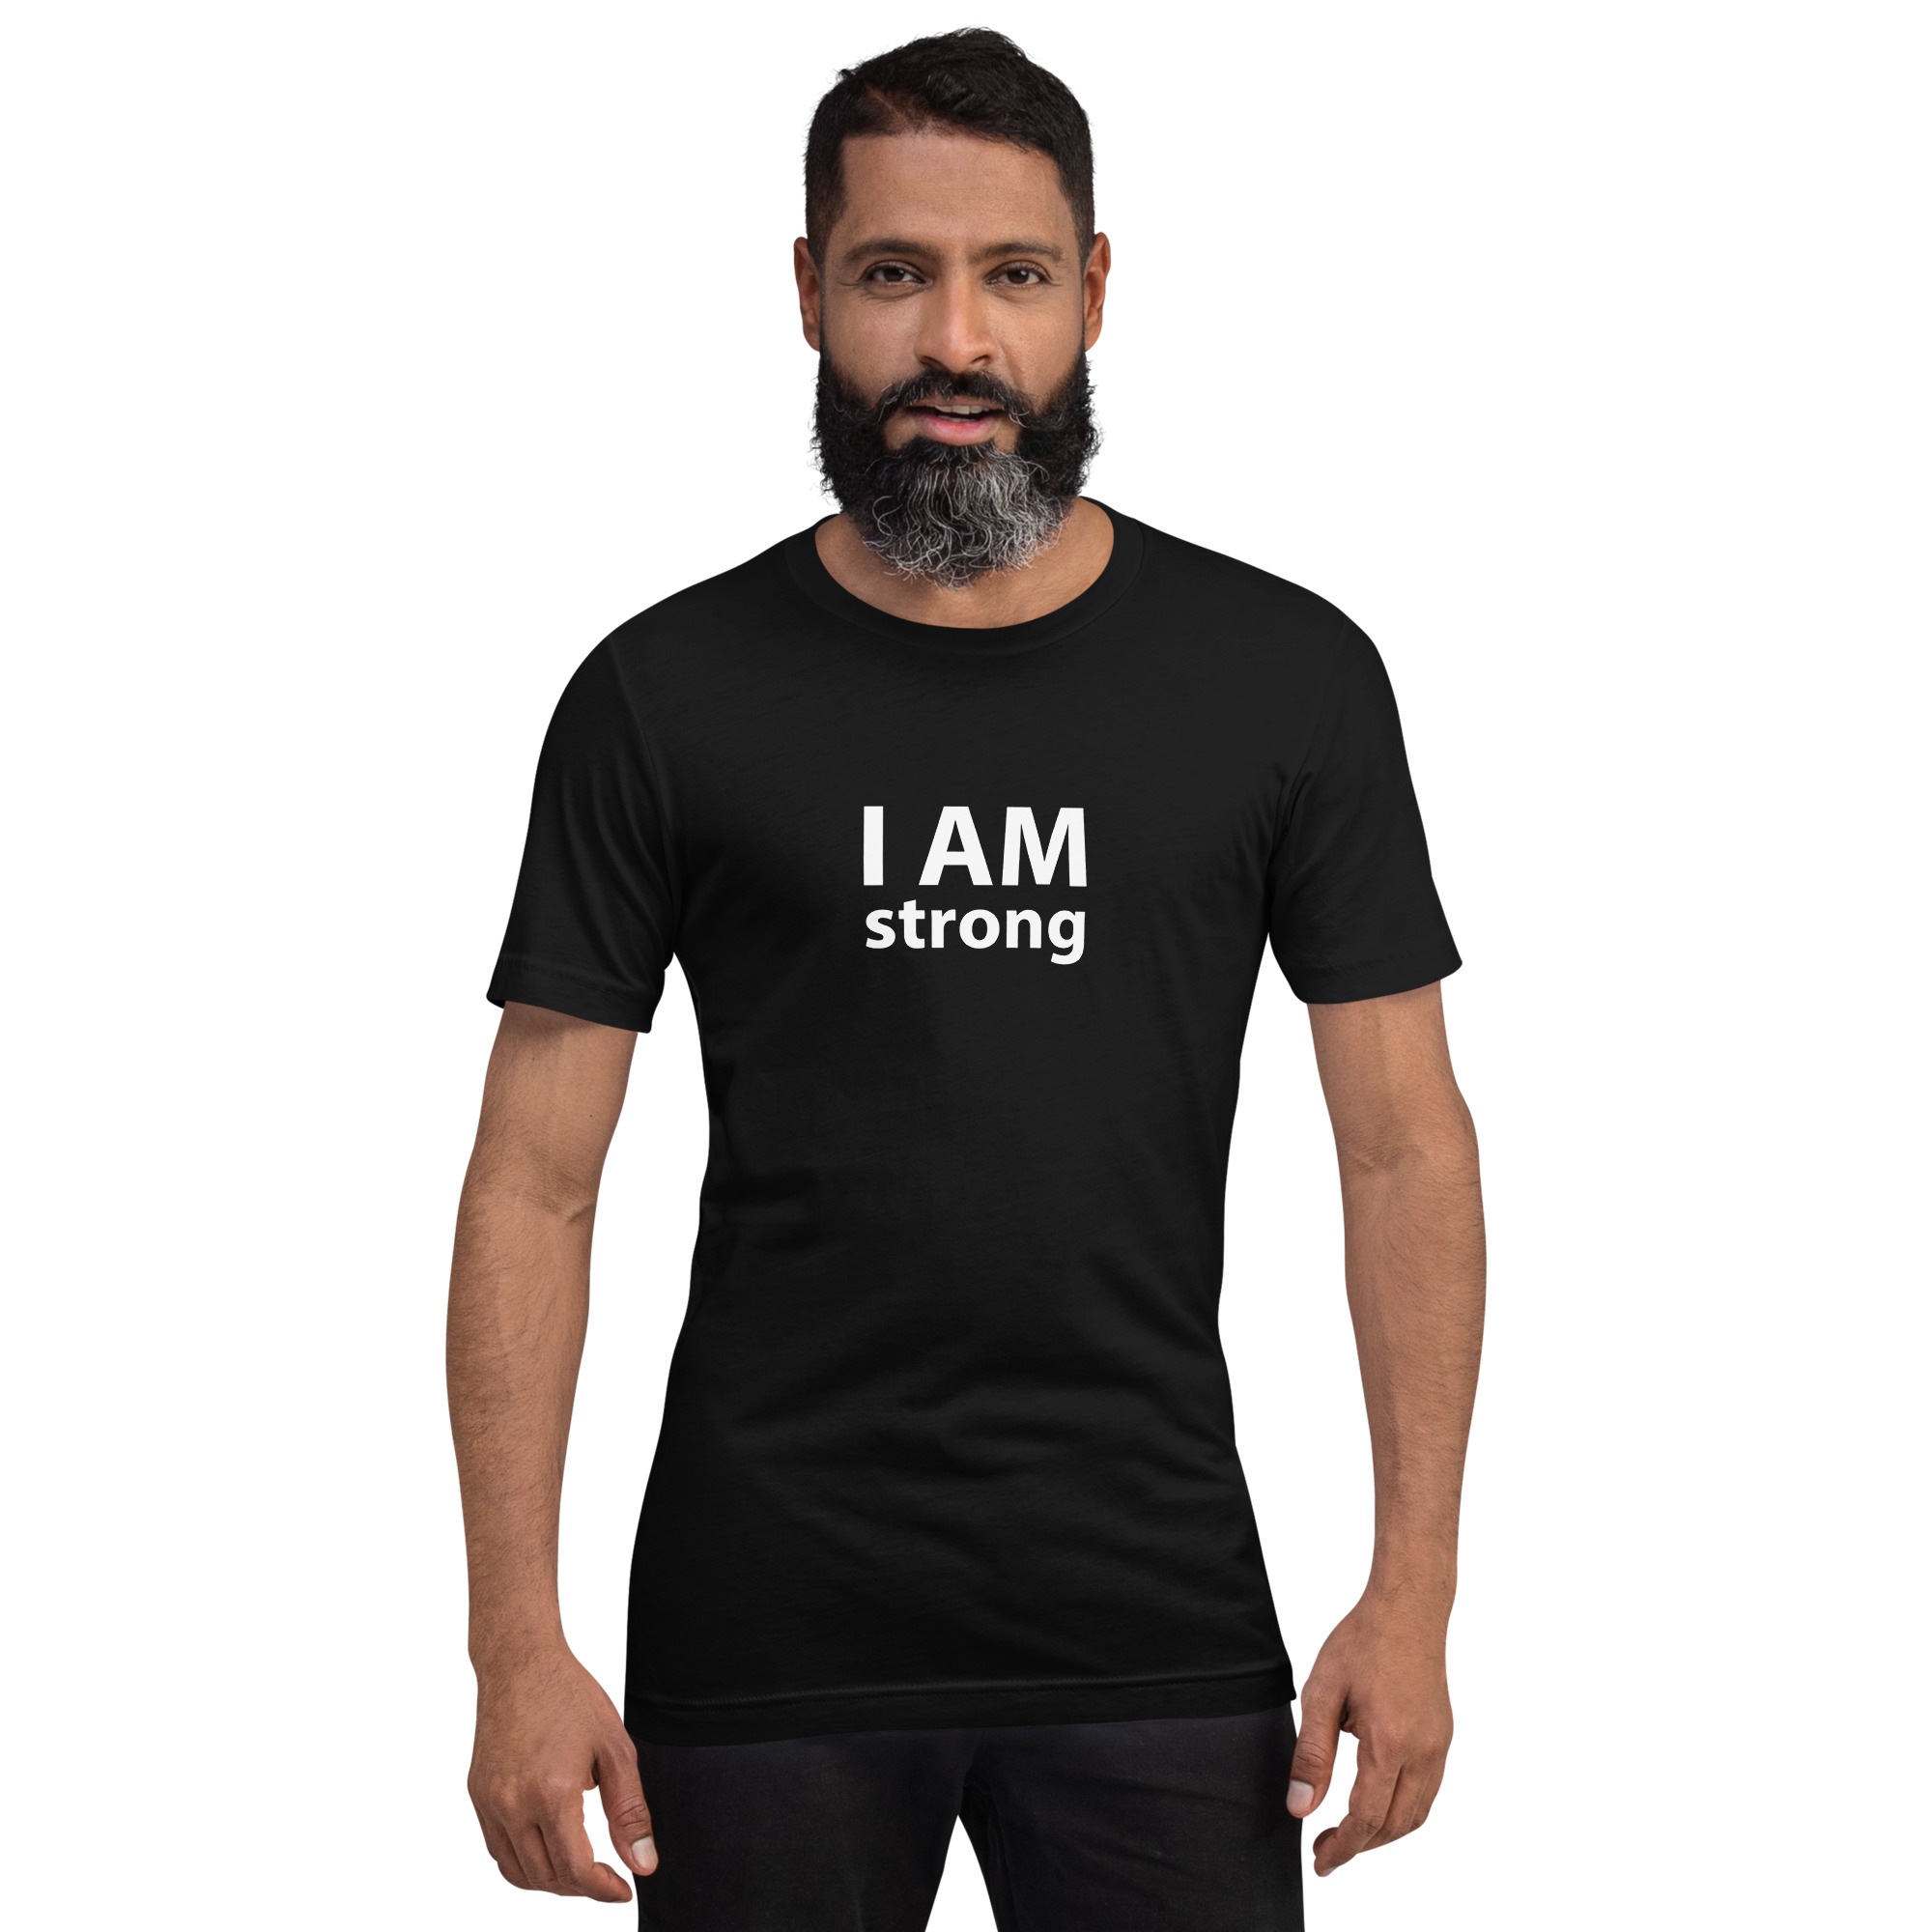 I AM Strong Tshirt